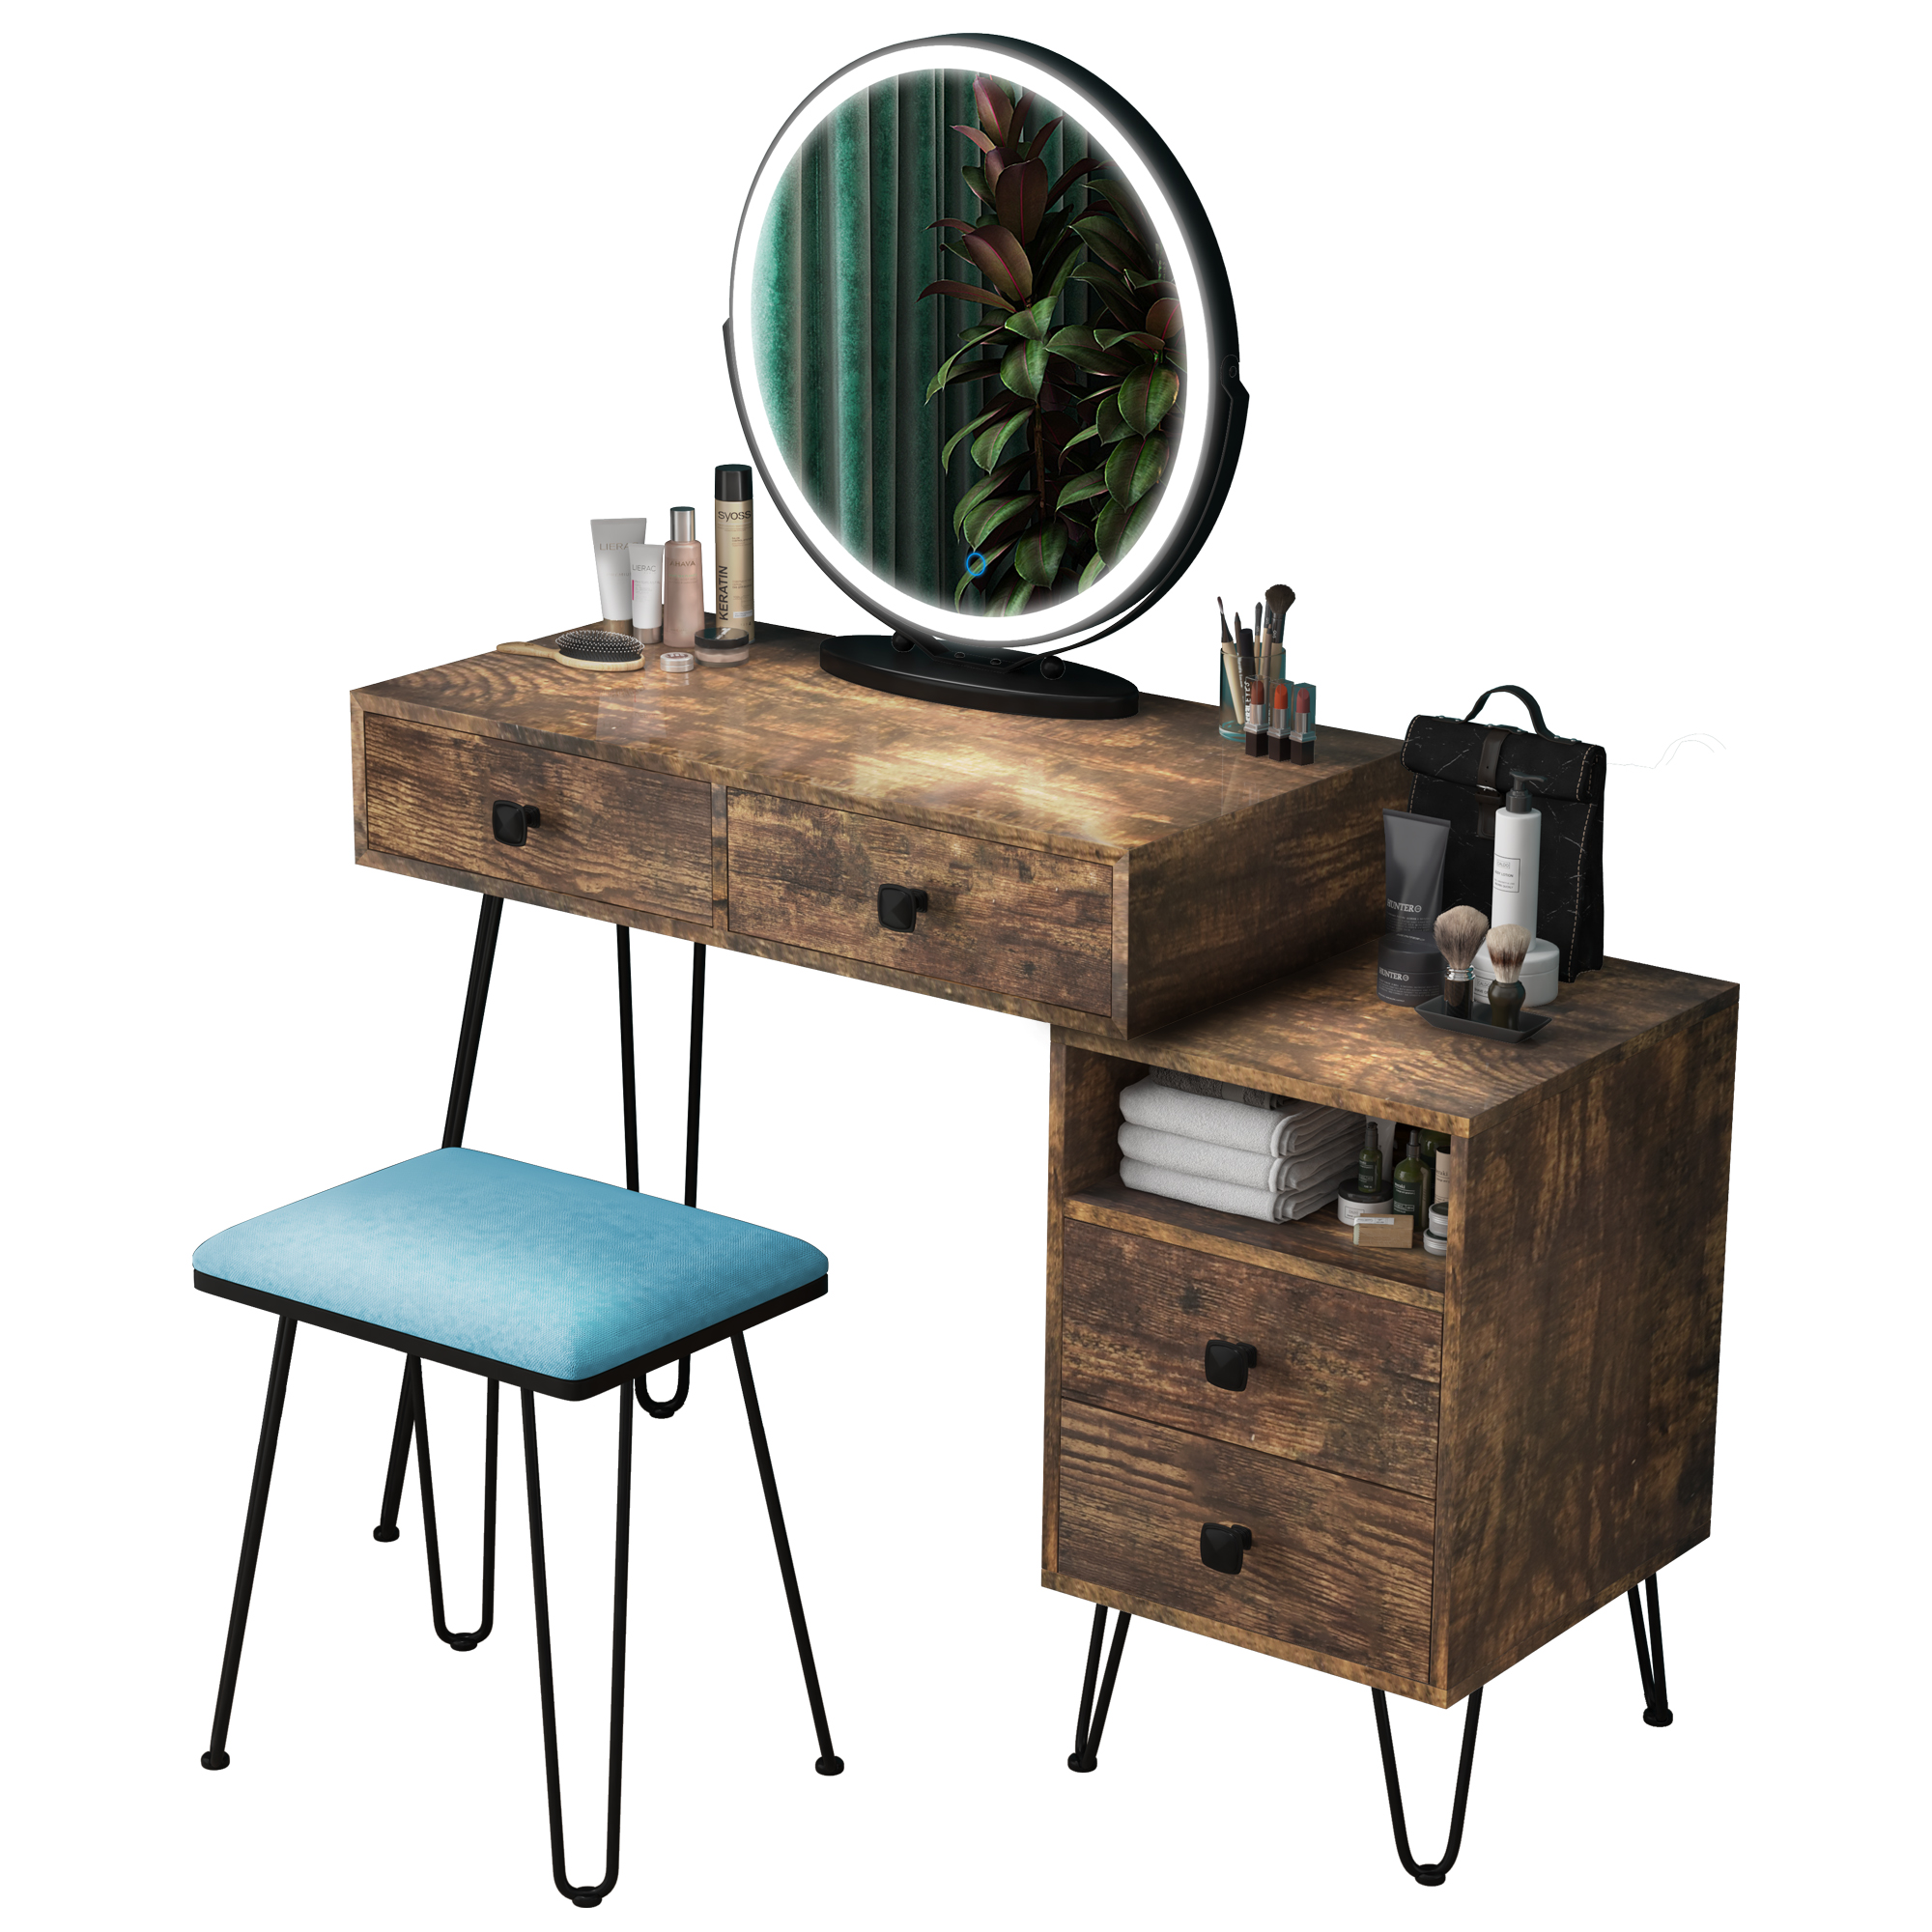 LVSOMT Makeup Vanity Table with Mirror & Stool, Rustic Brown